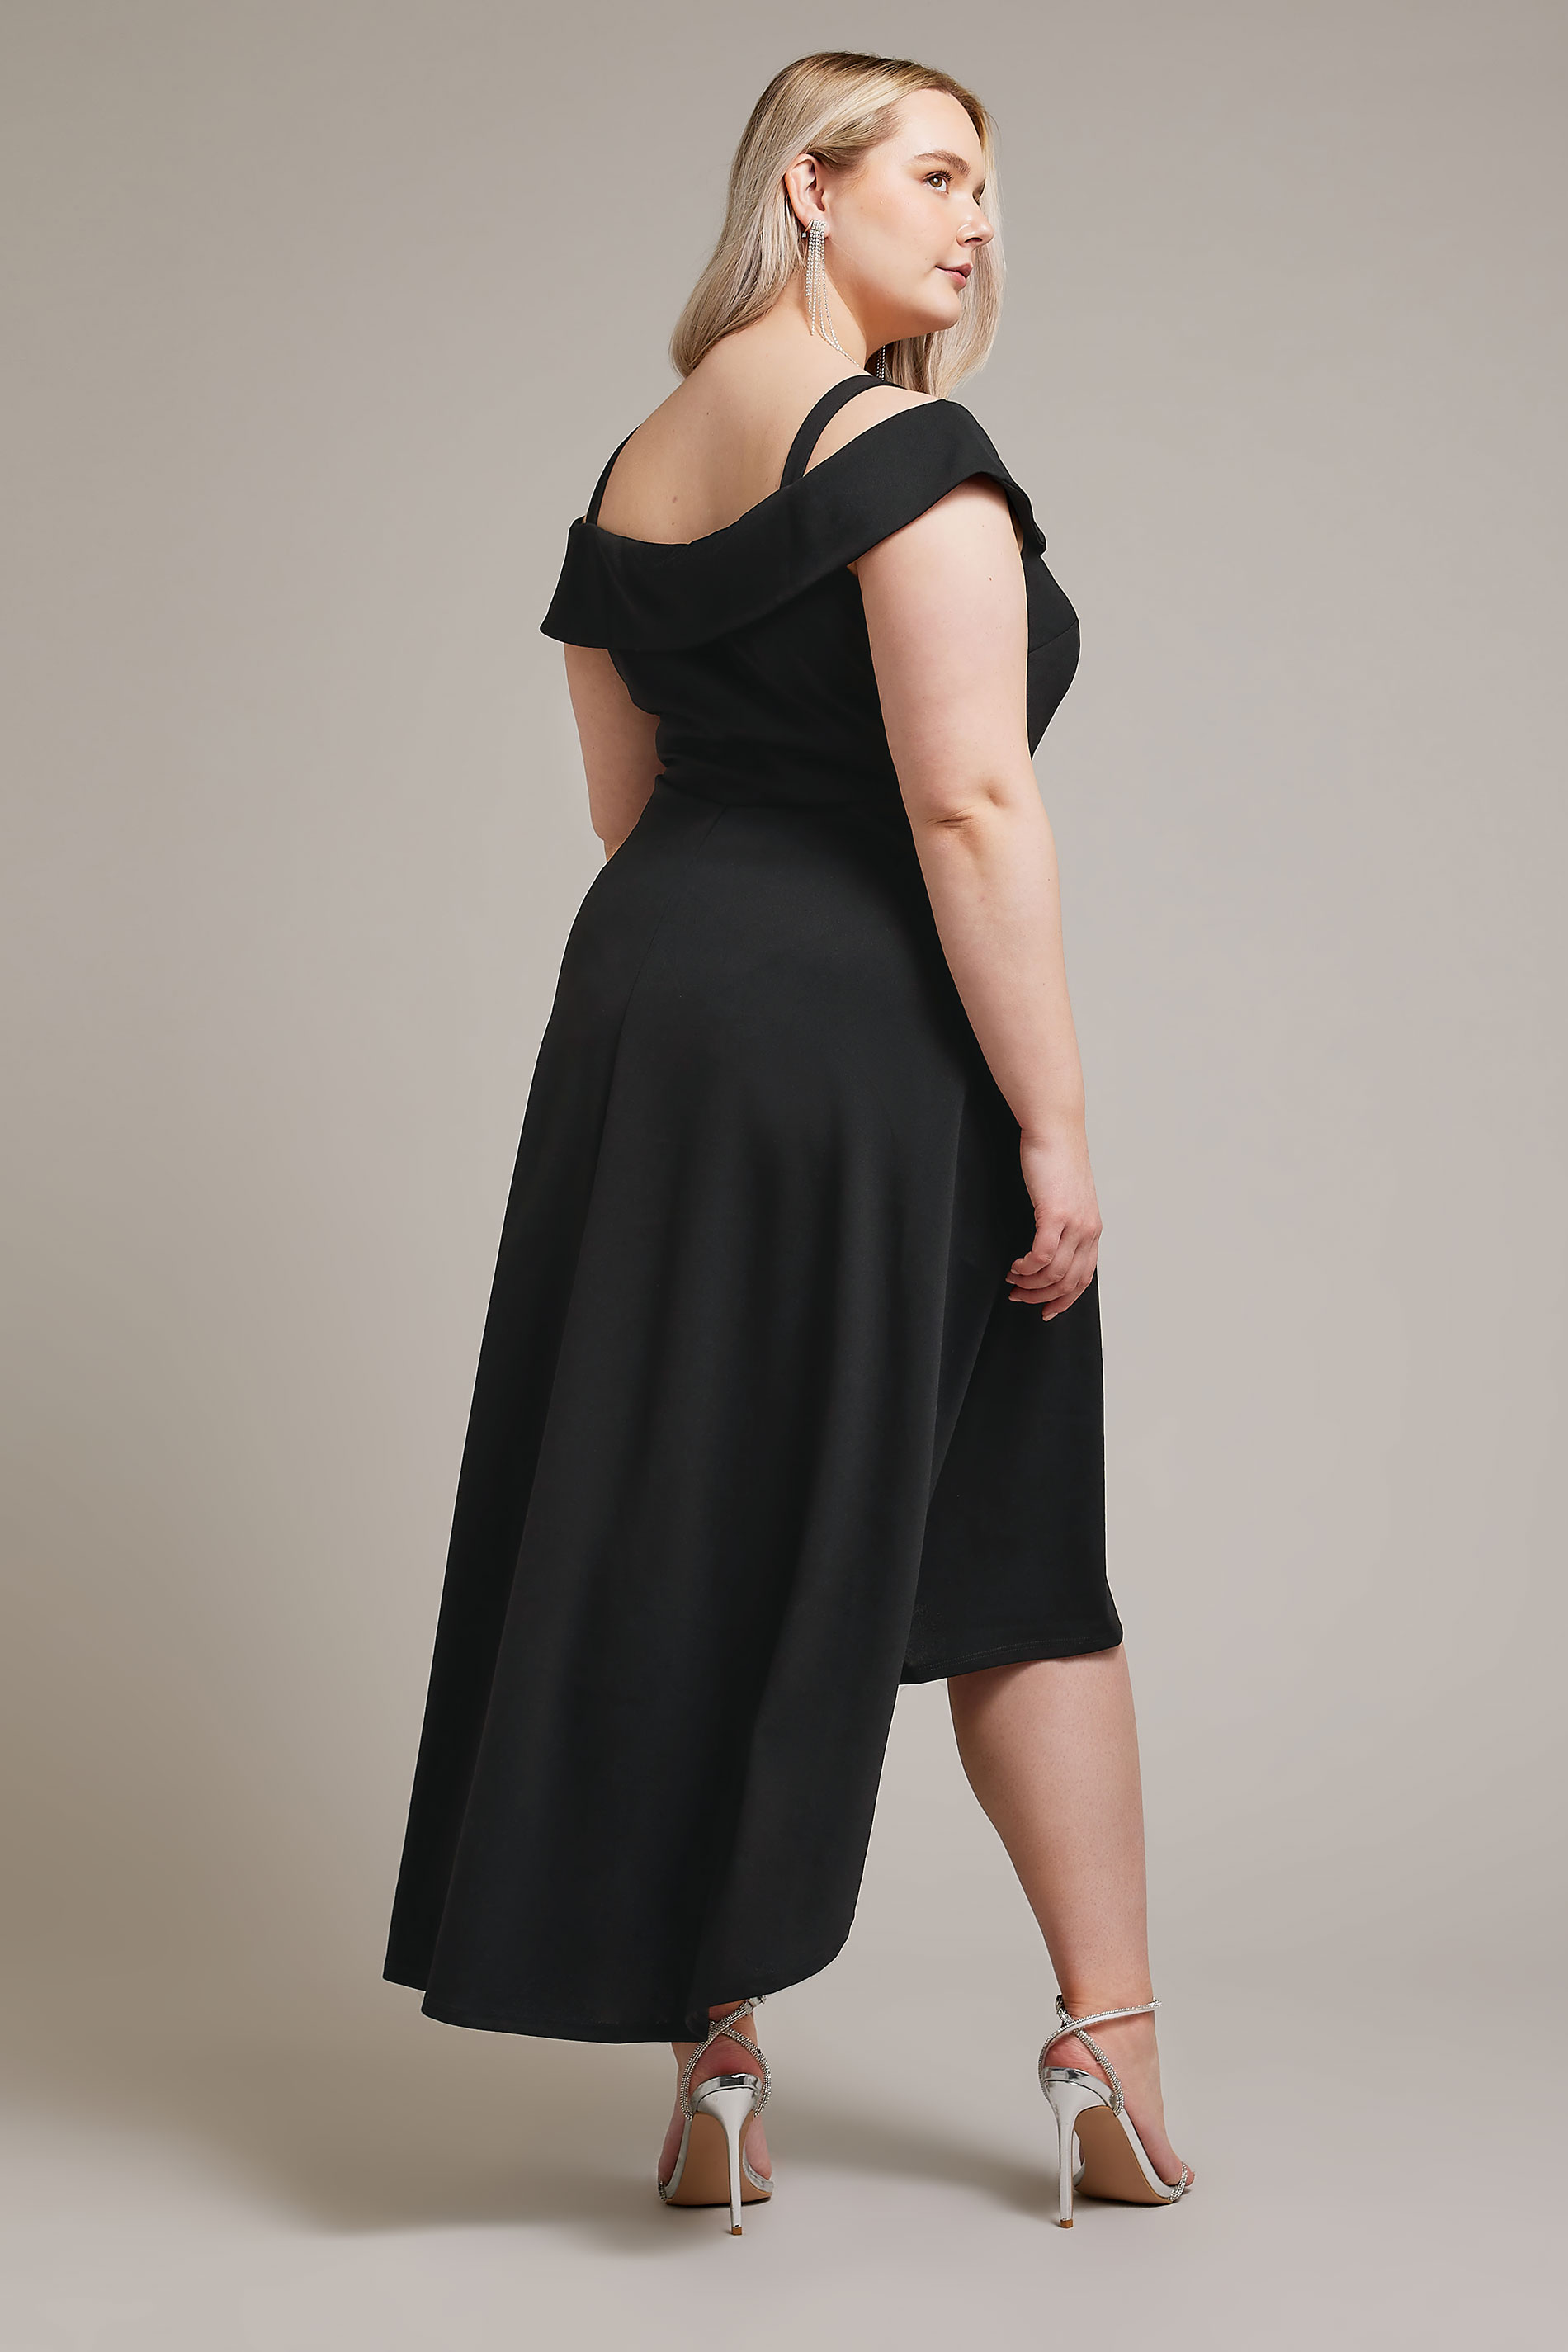 YOURS LONDON Plus Size Black Bardot Dipped Hem Dress | Yours Clothing 3